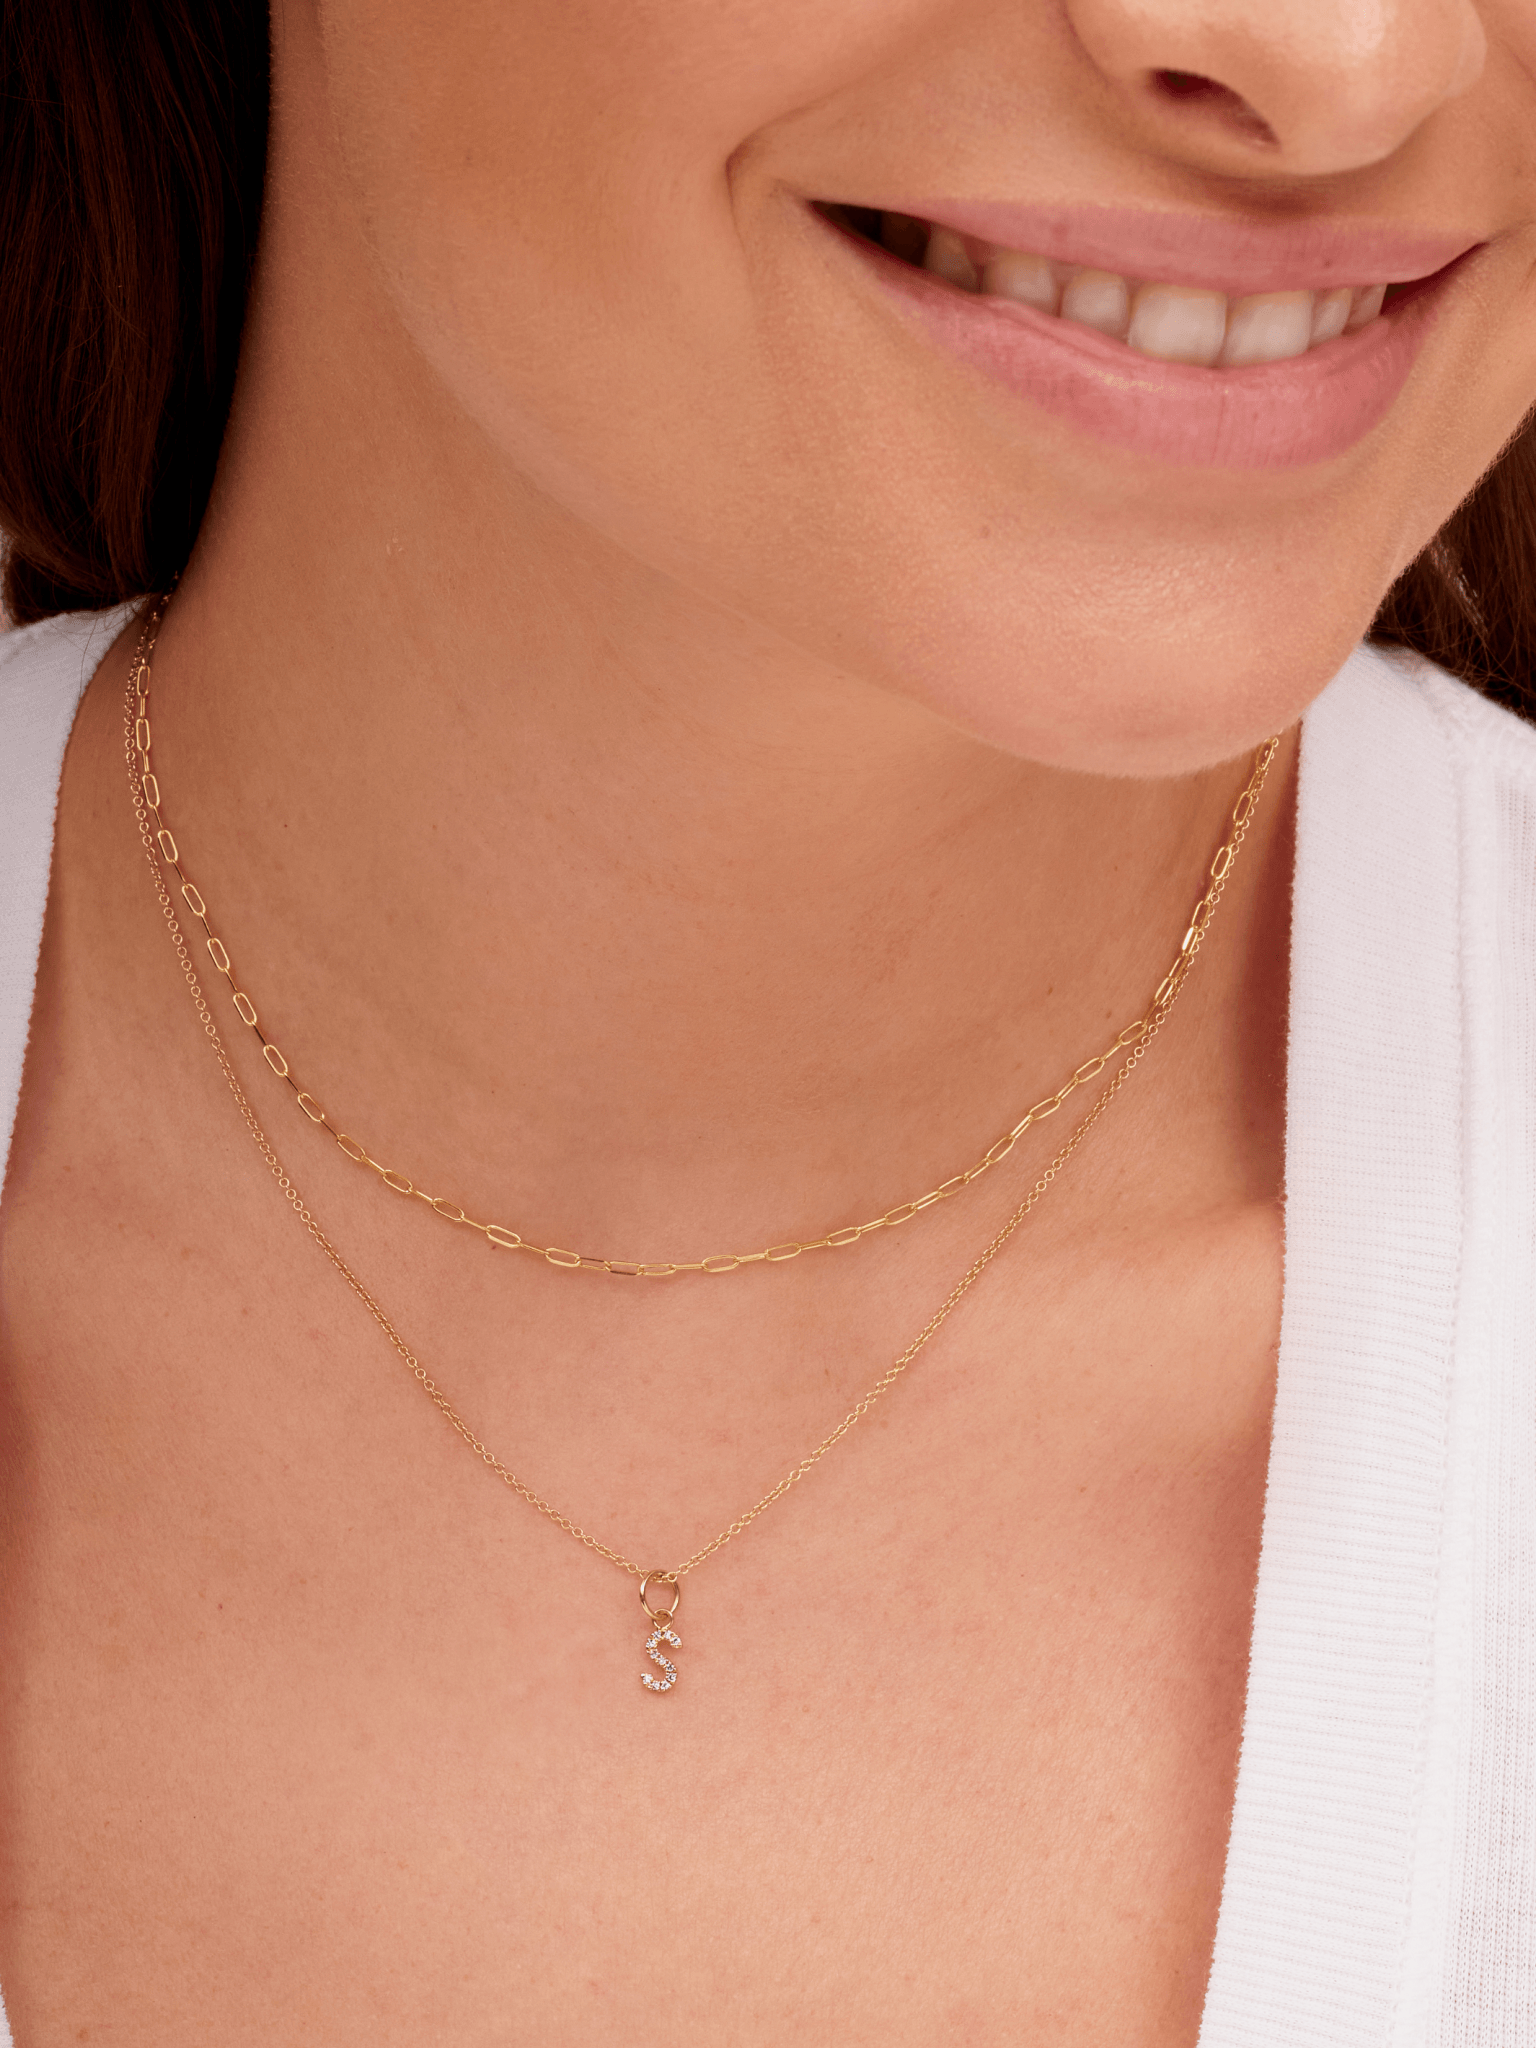 Thin Diamond Bar Necklace in 14k Gold - Mini - KAMARIA